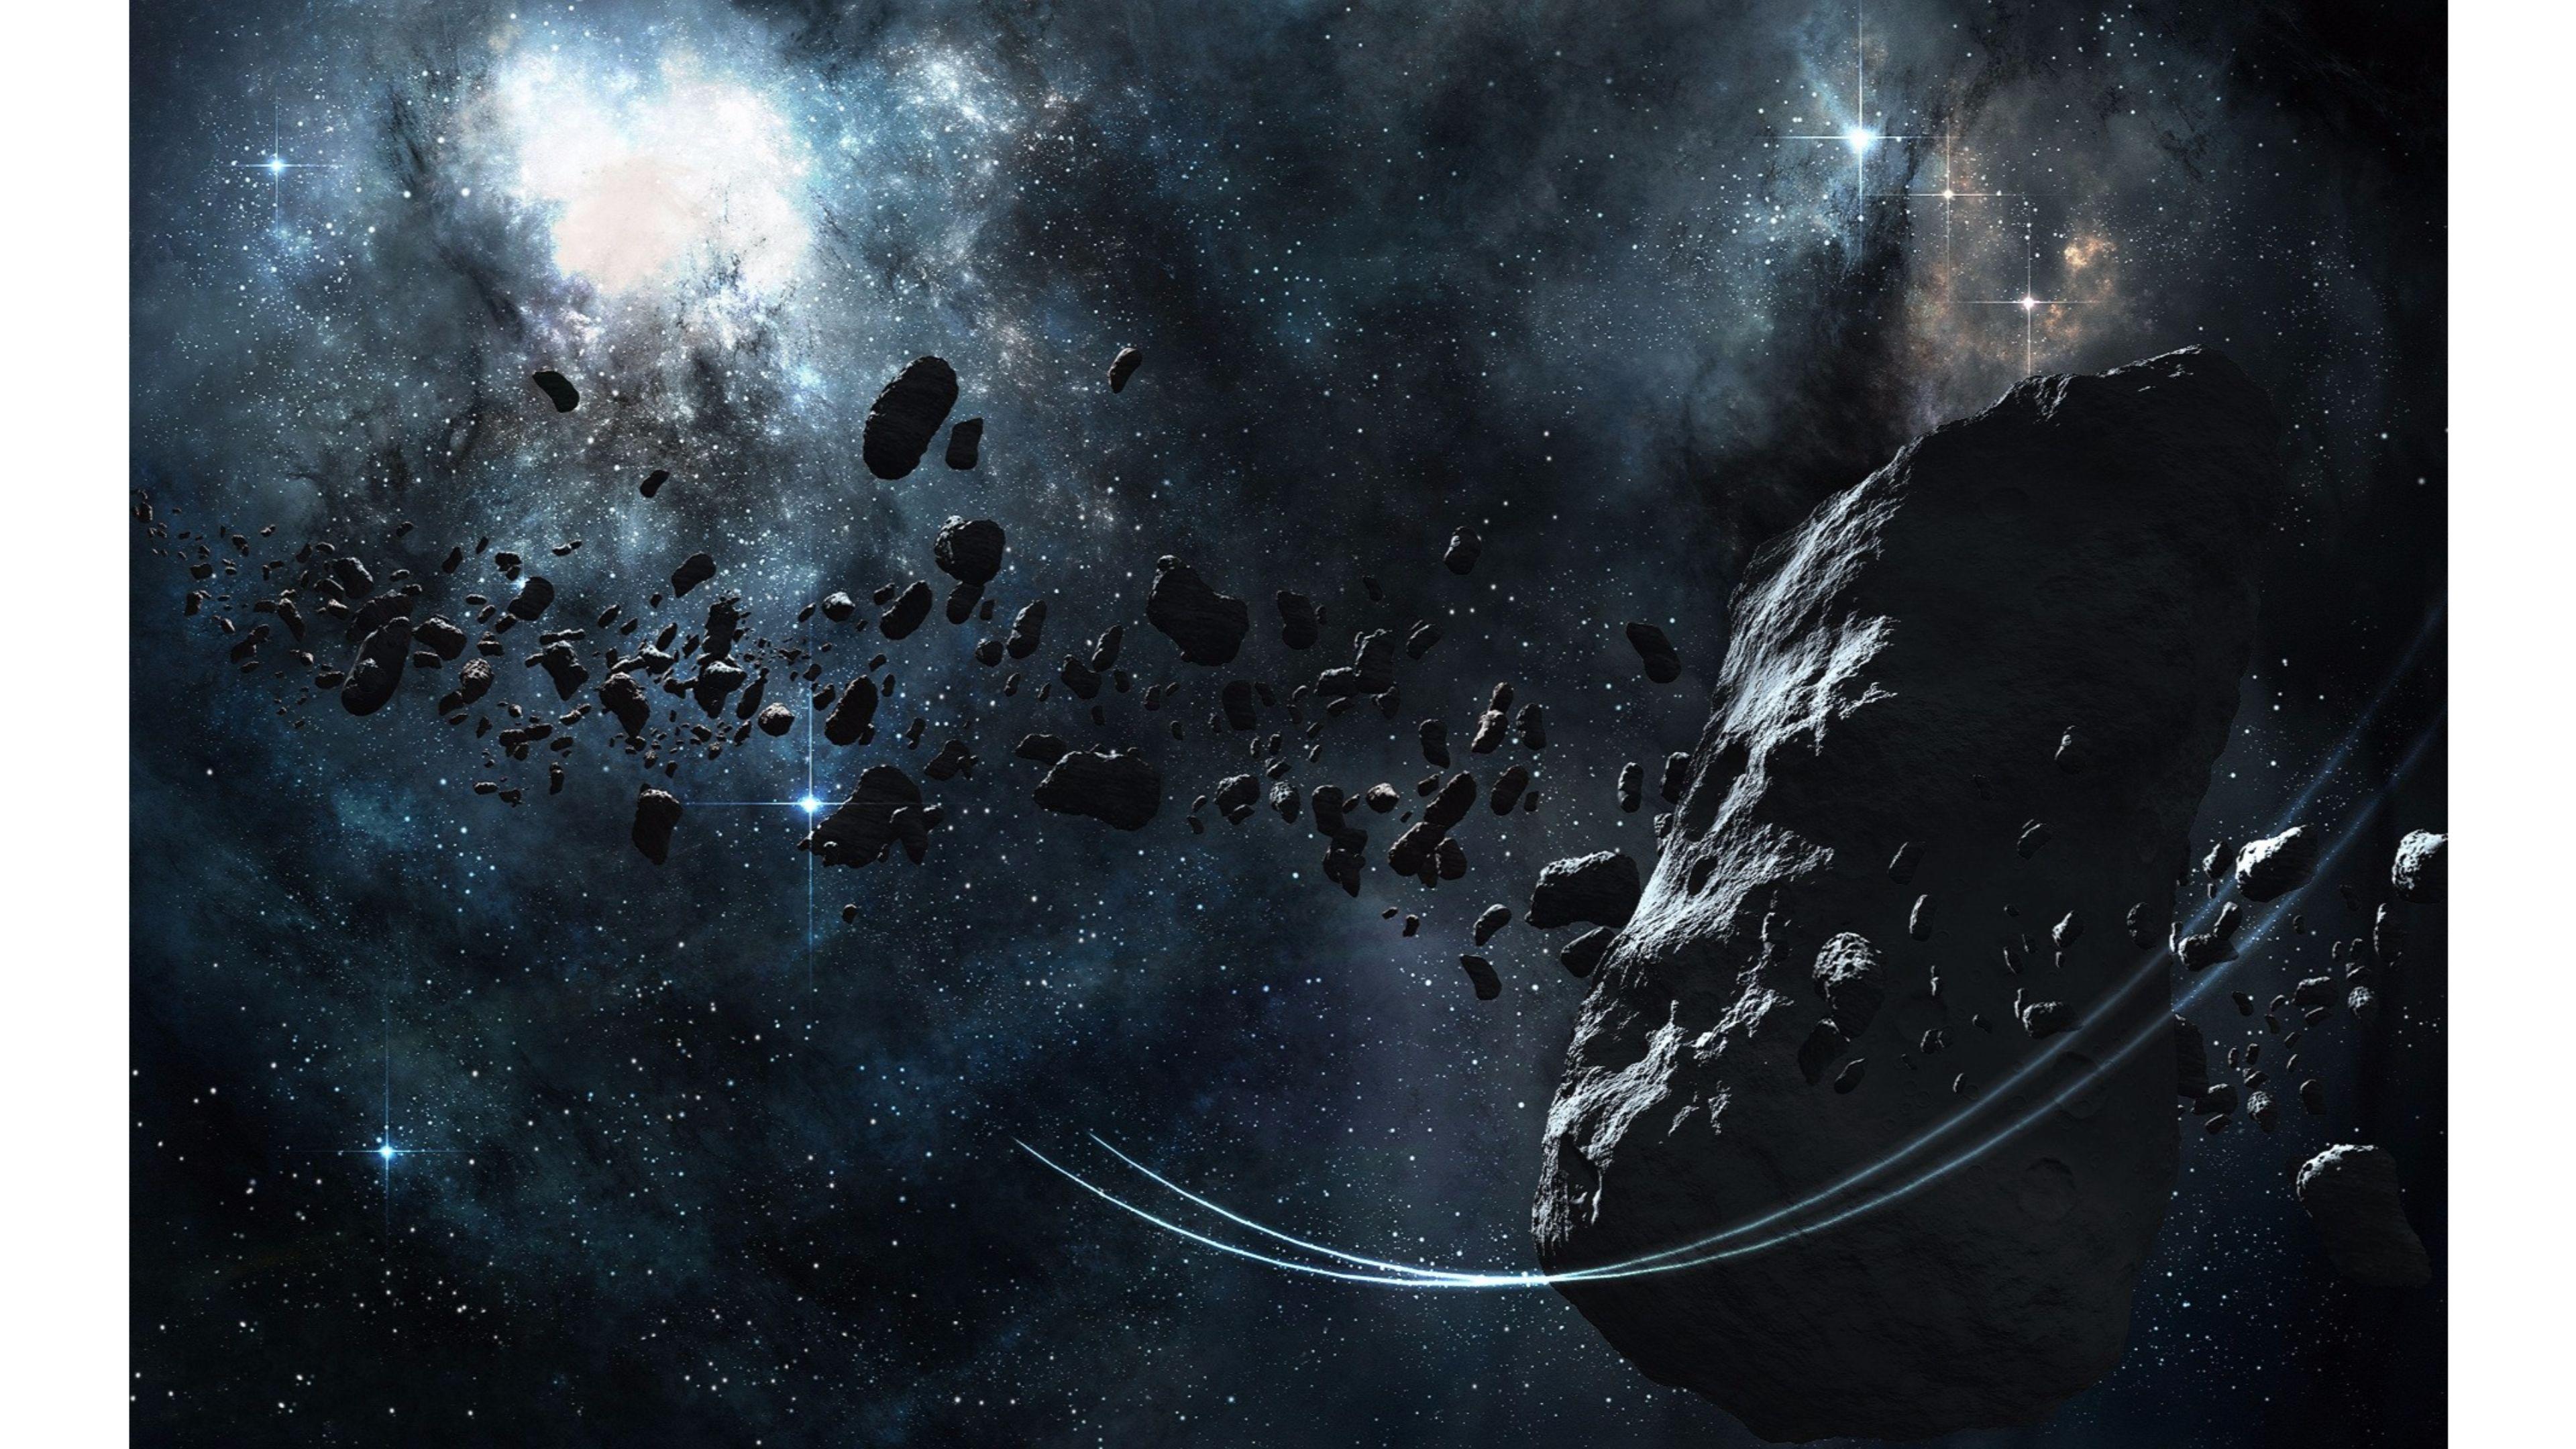 Falling Meteor and Asteroid 4K Wallpaper. Free 4K Wallpaper